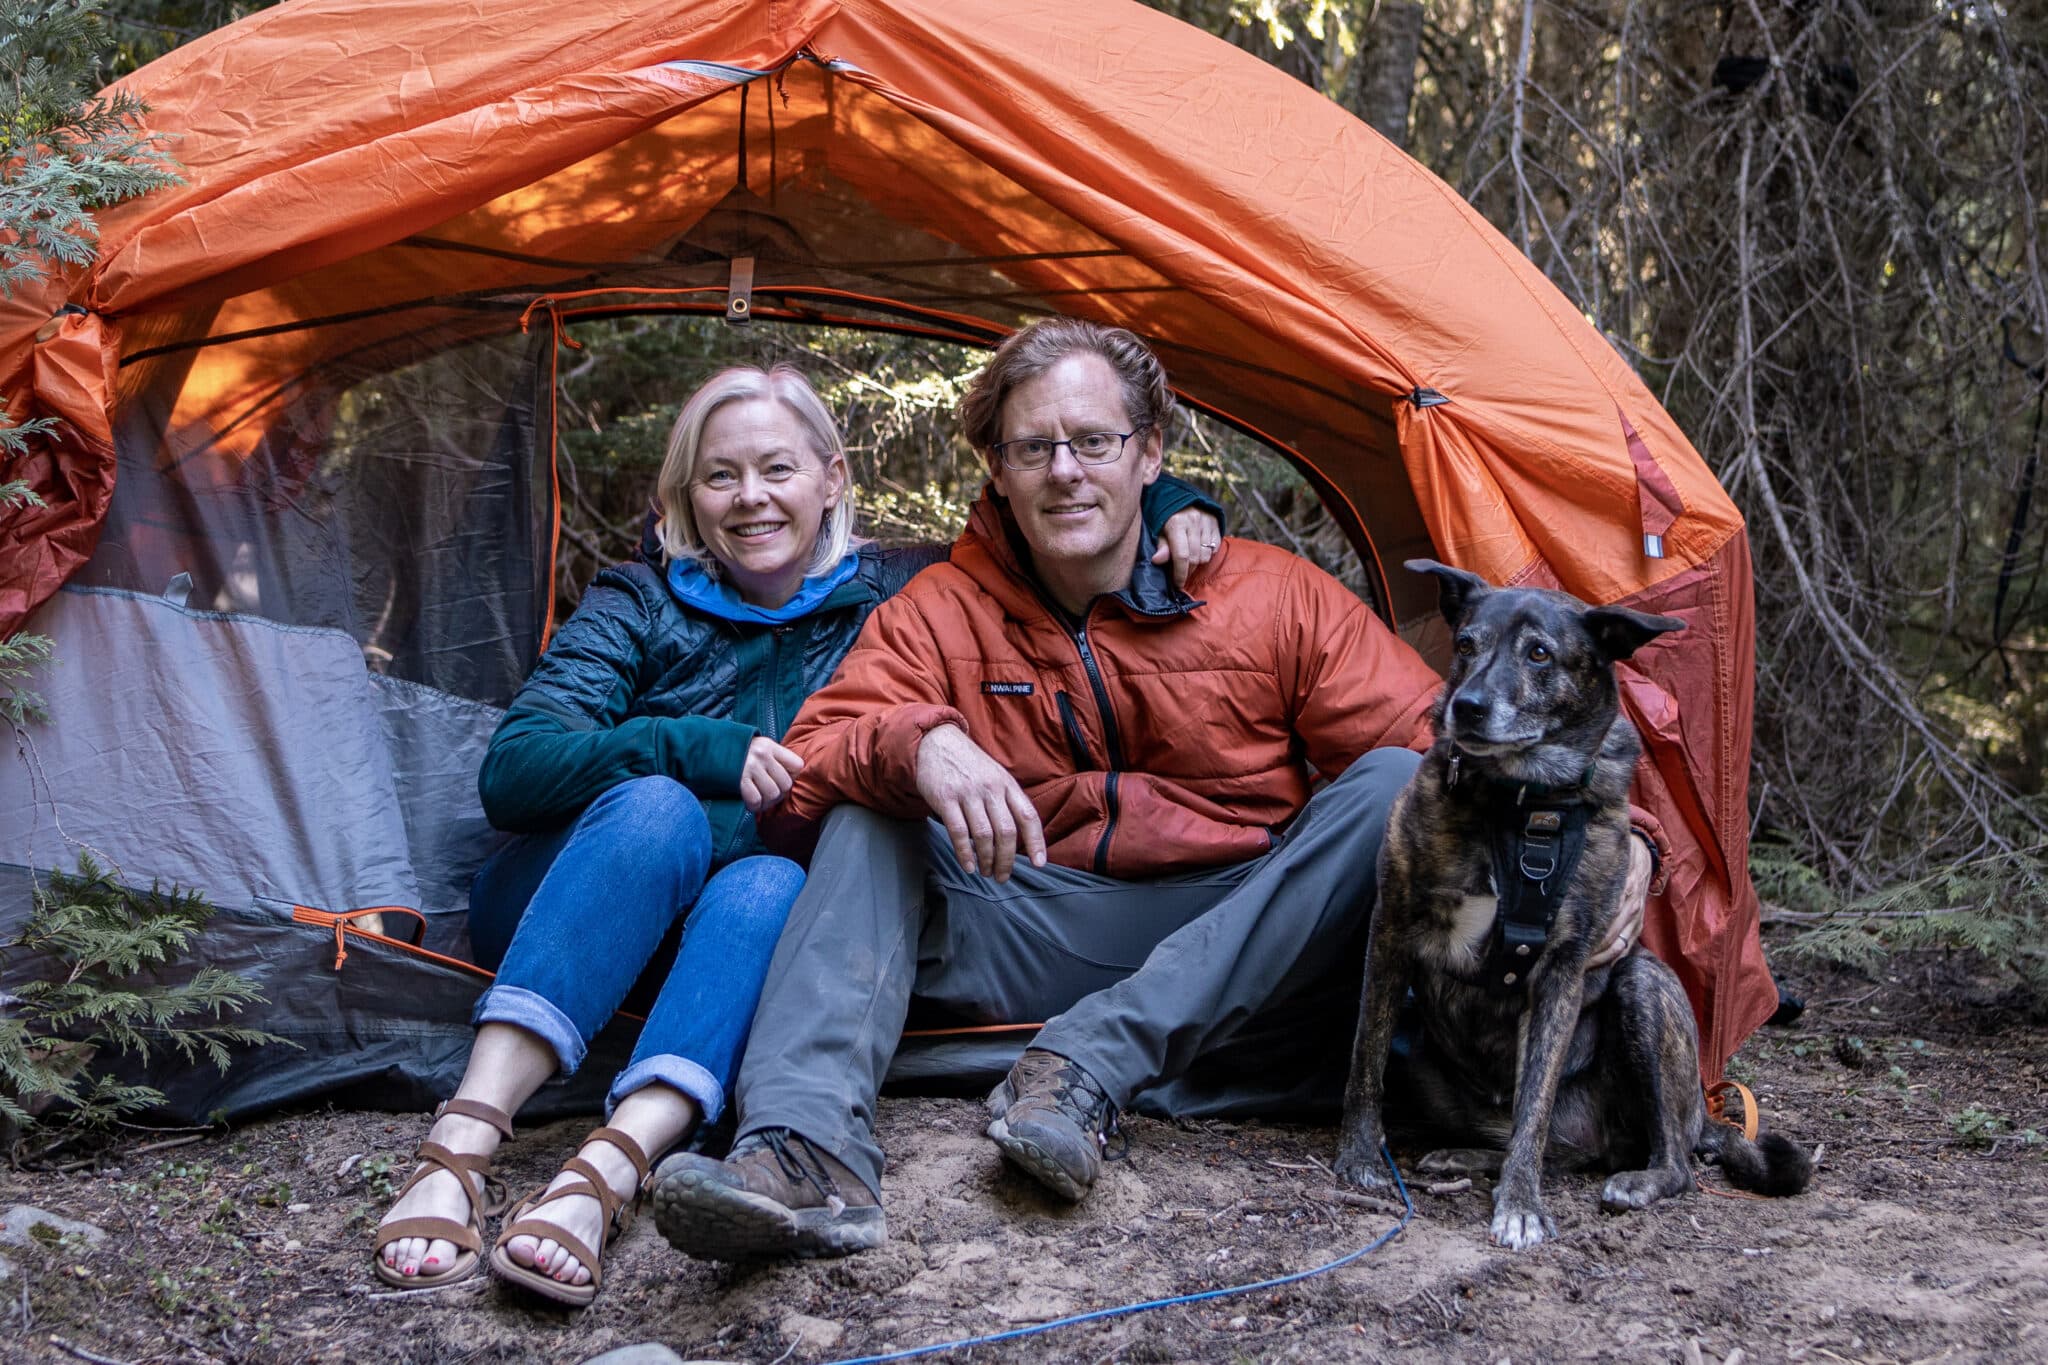 Colorado camping app raises $11 millon